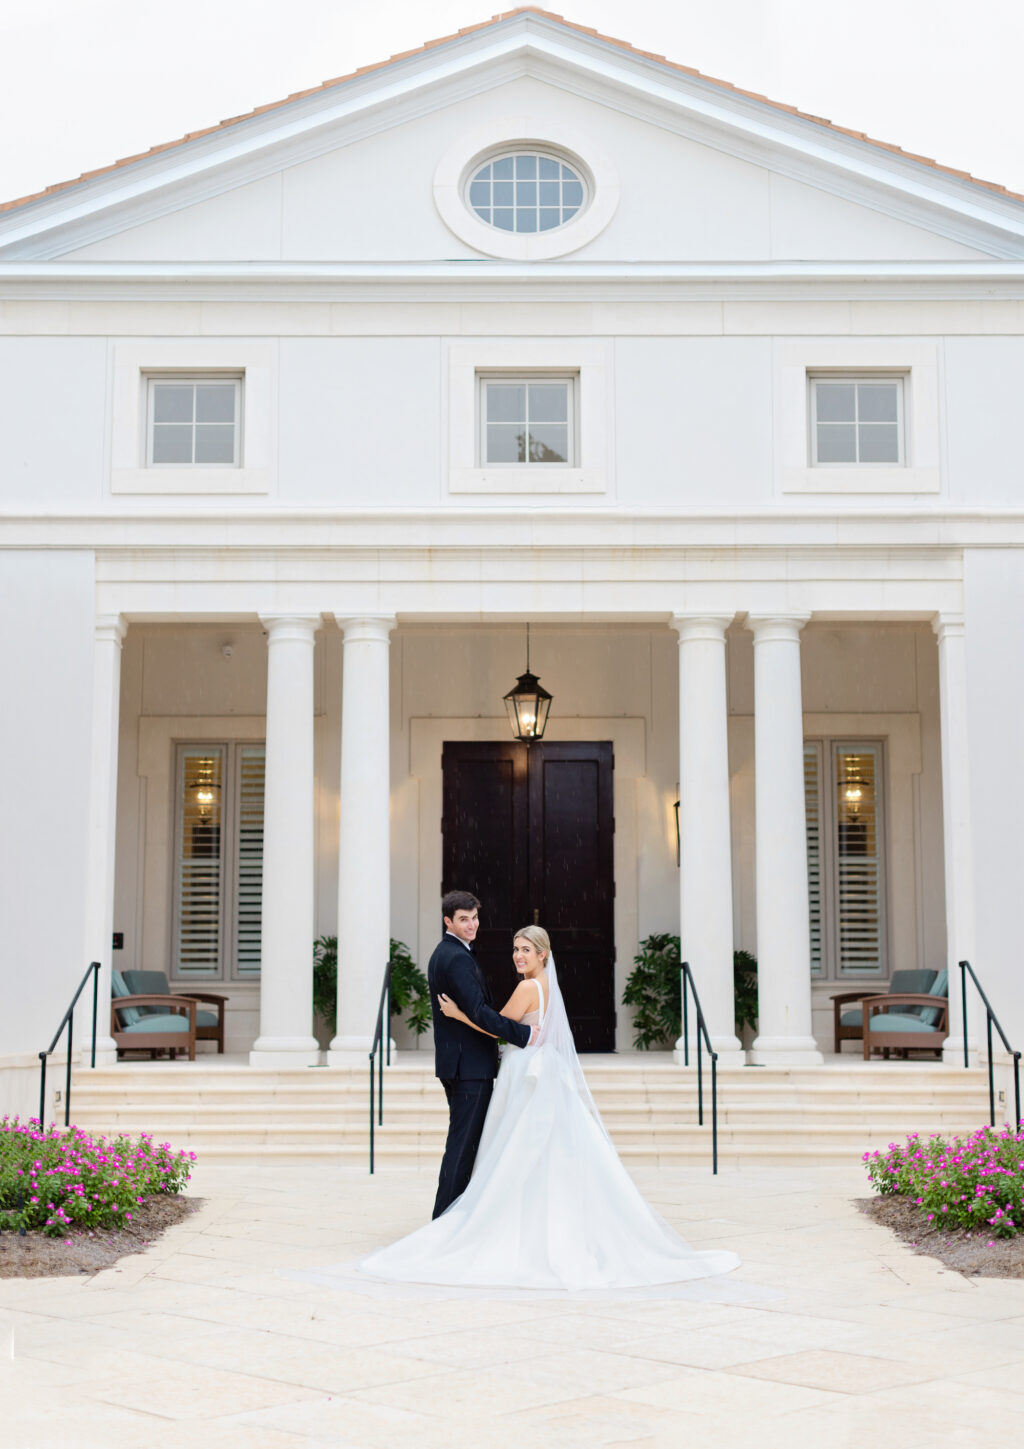 Bride And Groom Outdoor Wedding Portrait | Sarasota Venue The Concession Golf Club